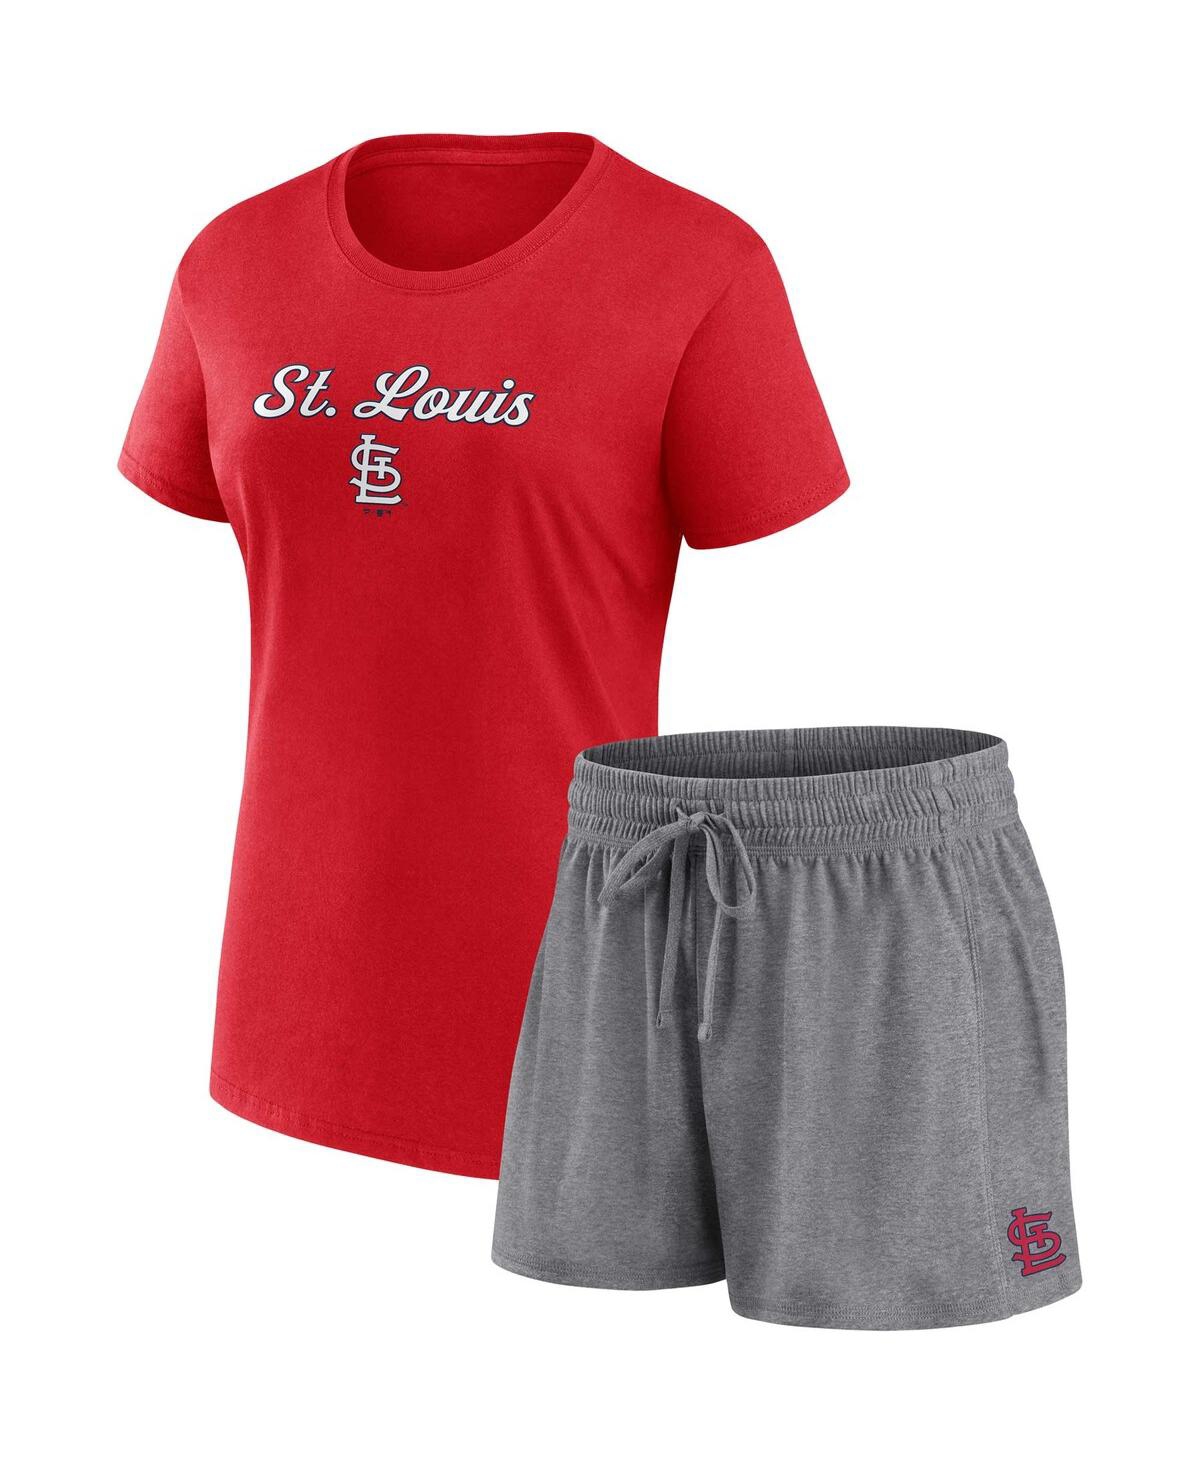 Women's Fanatics Red, Gray St. Louis Cardinals Script T-shirt and Shorts Combo Set - Red, Gray